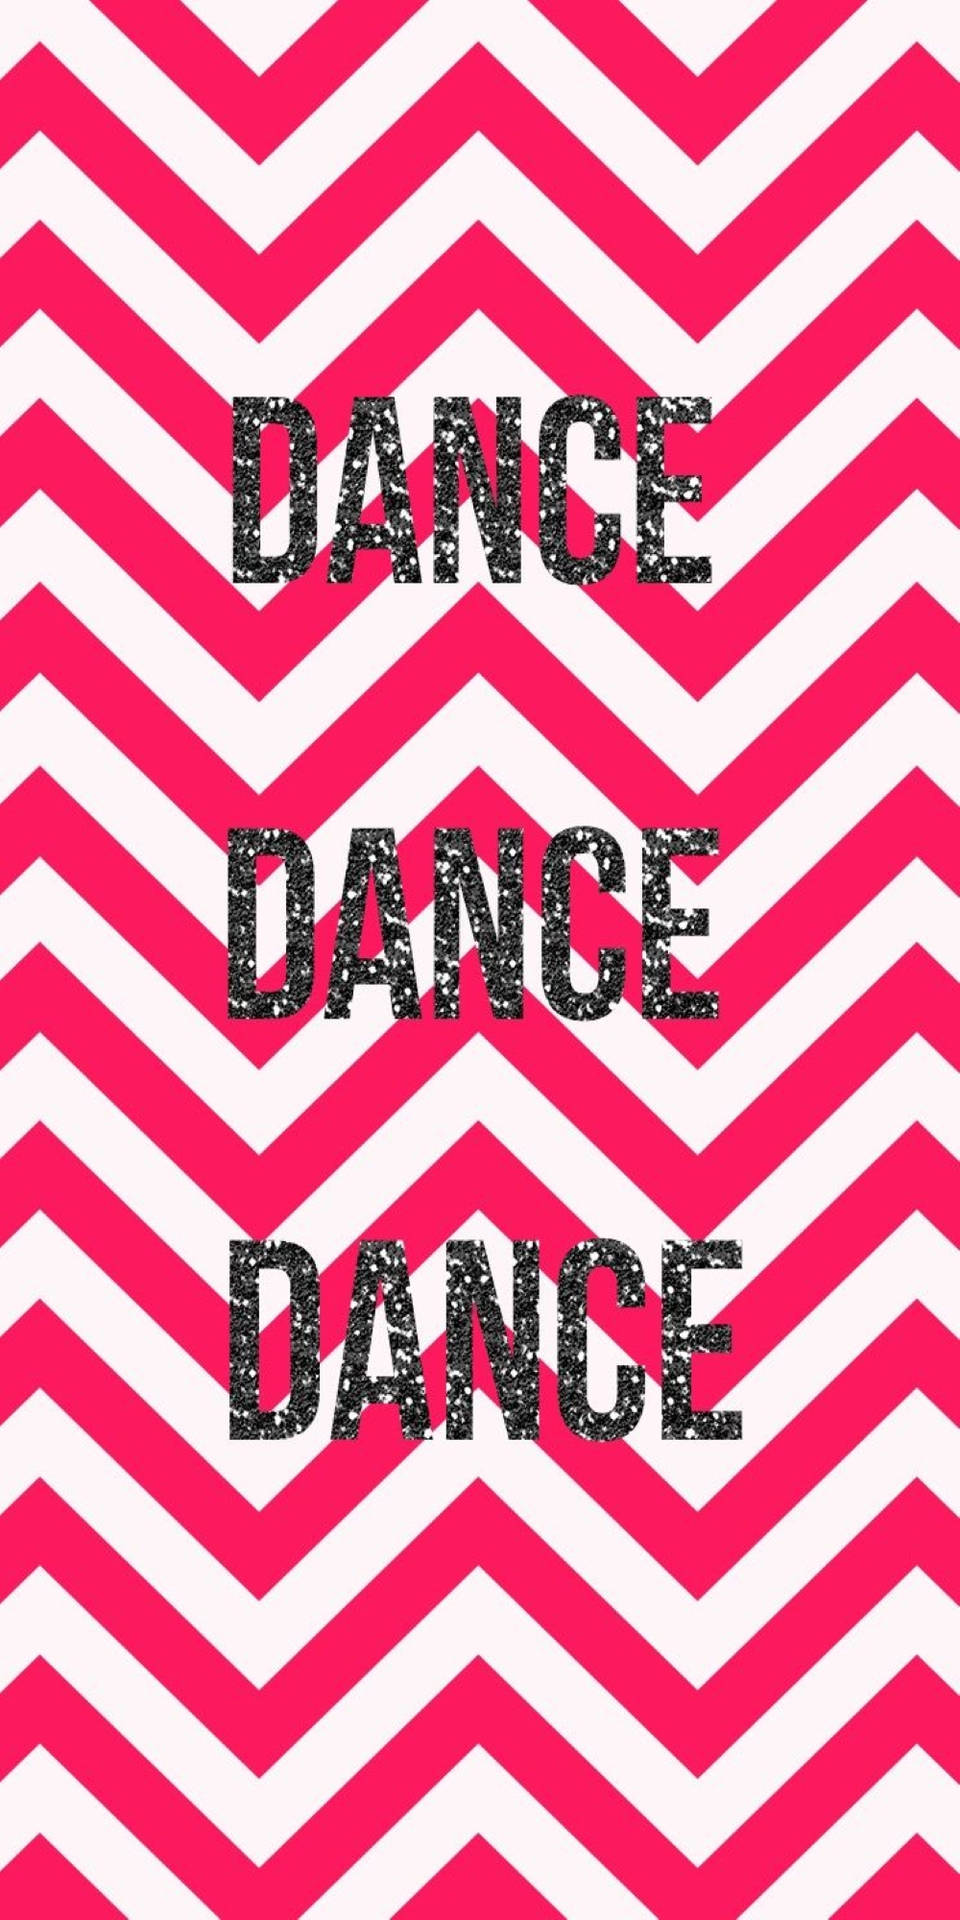 Dance Wordmark på Zickzag mønster Wallpaper